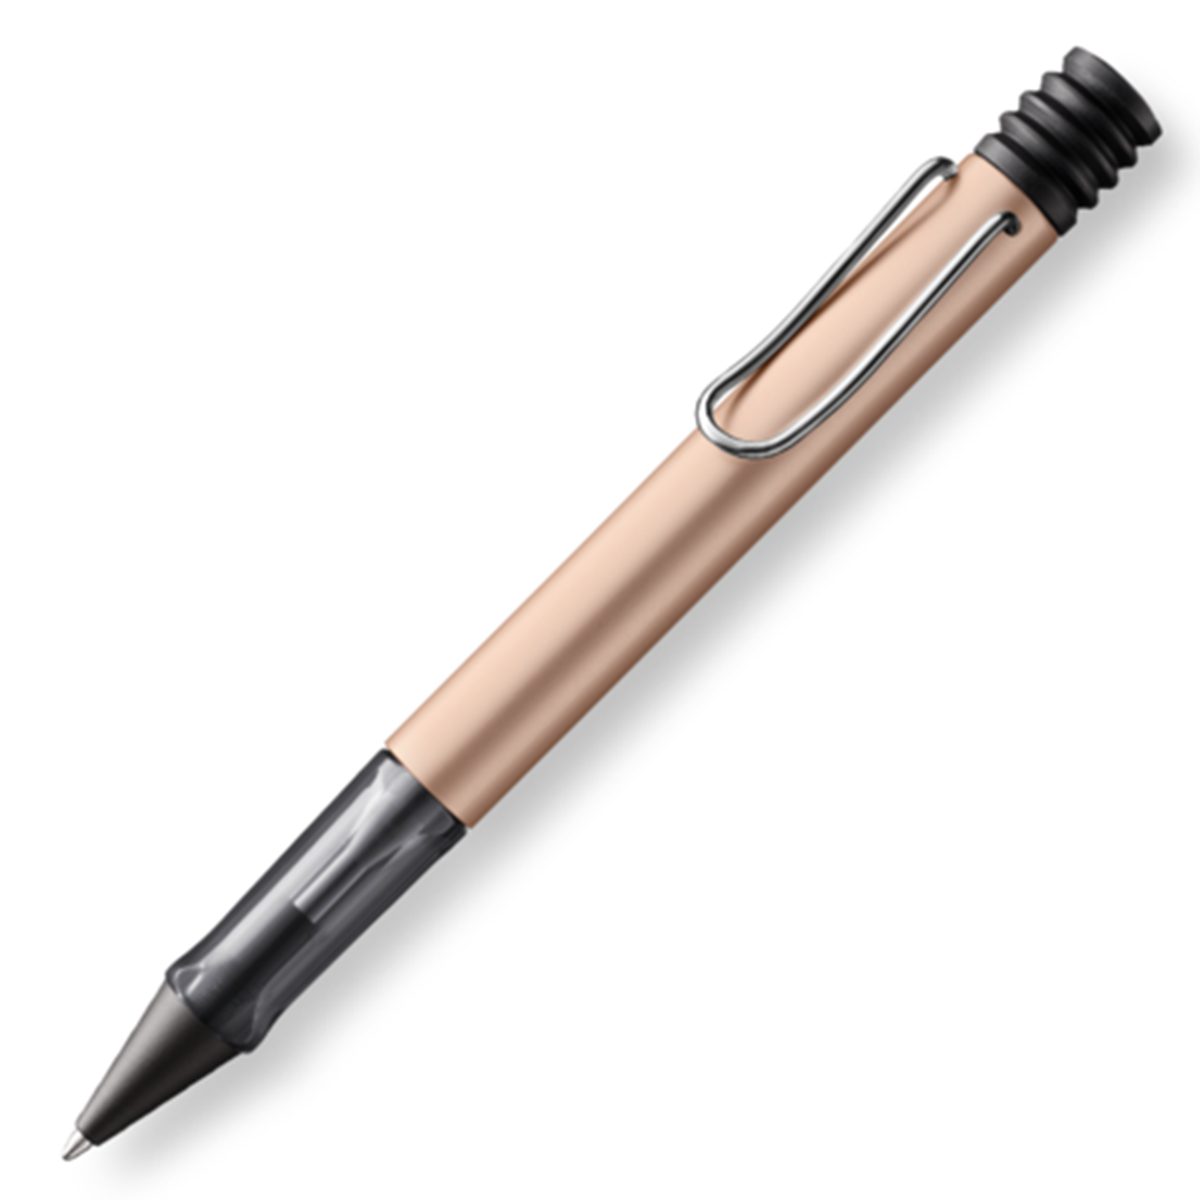 AL-star Ballpoint Cosmic in the group Pens / Fine Writing / Ballpoint Pens at Pen Store (125531)